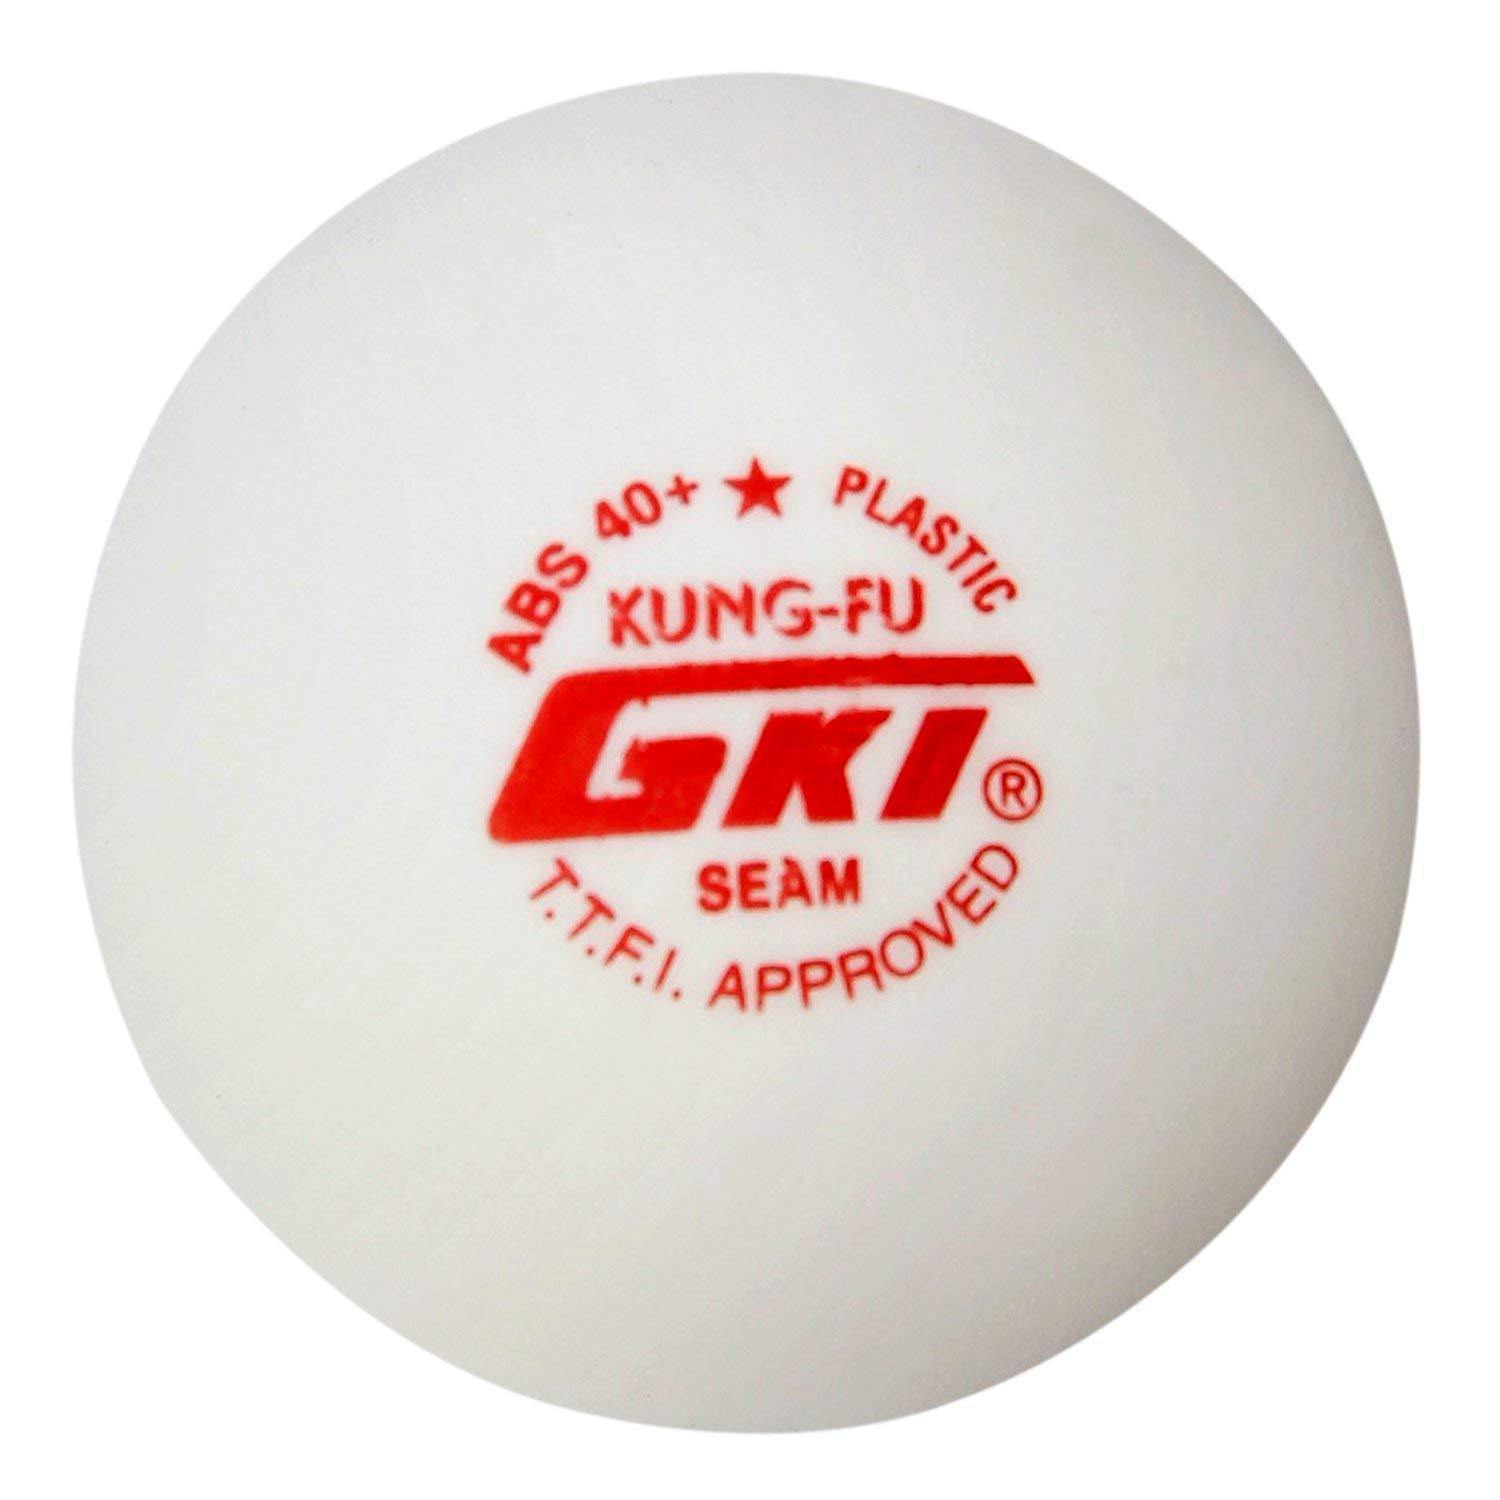 GKI KungFu Seam ABS 40+ Table Tennis Balls, Pack of 6